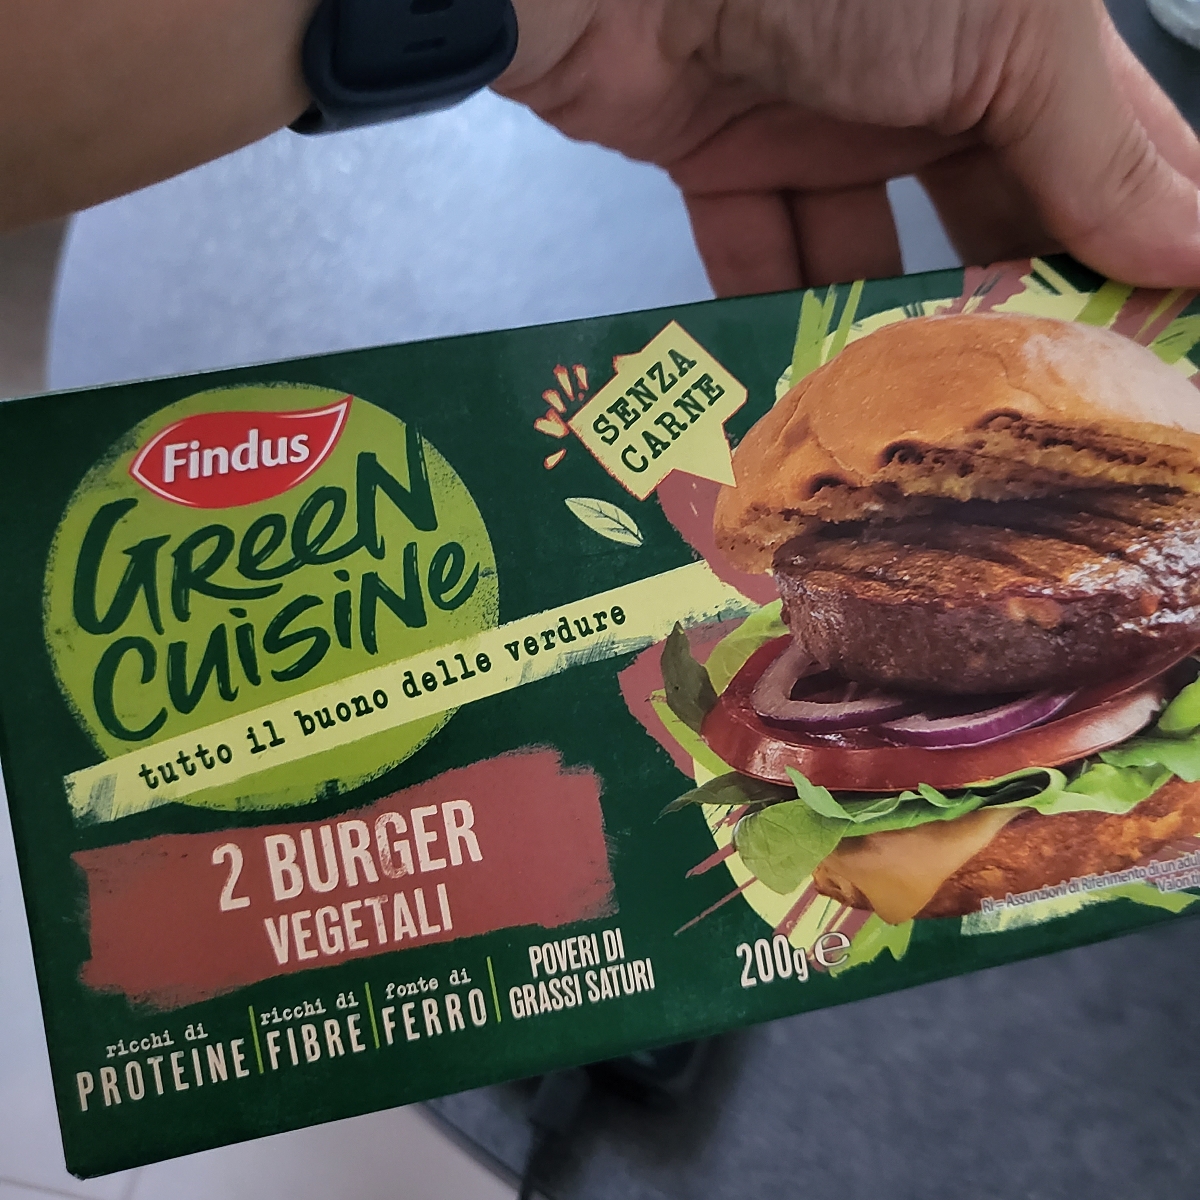 Findus Green cuisine burger vegetali Reviews | abillion